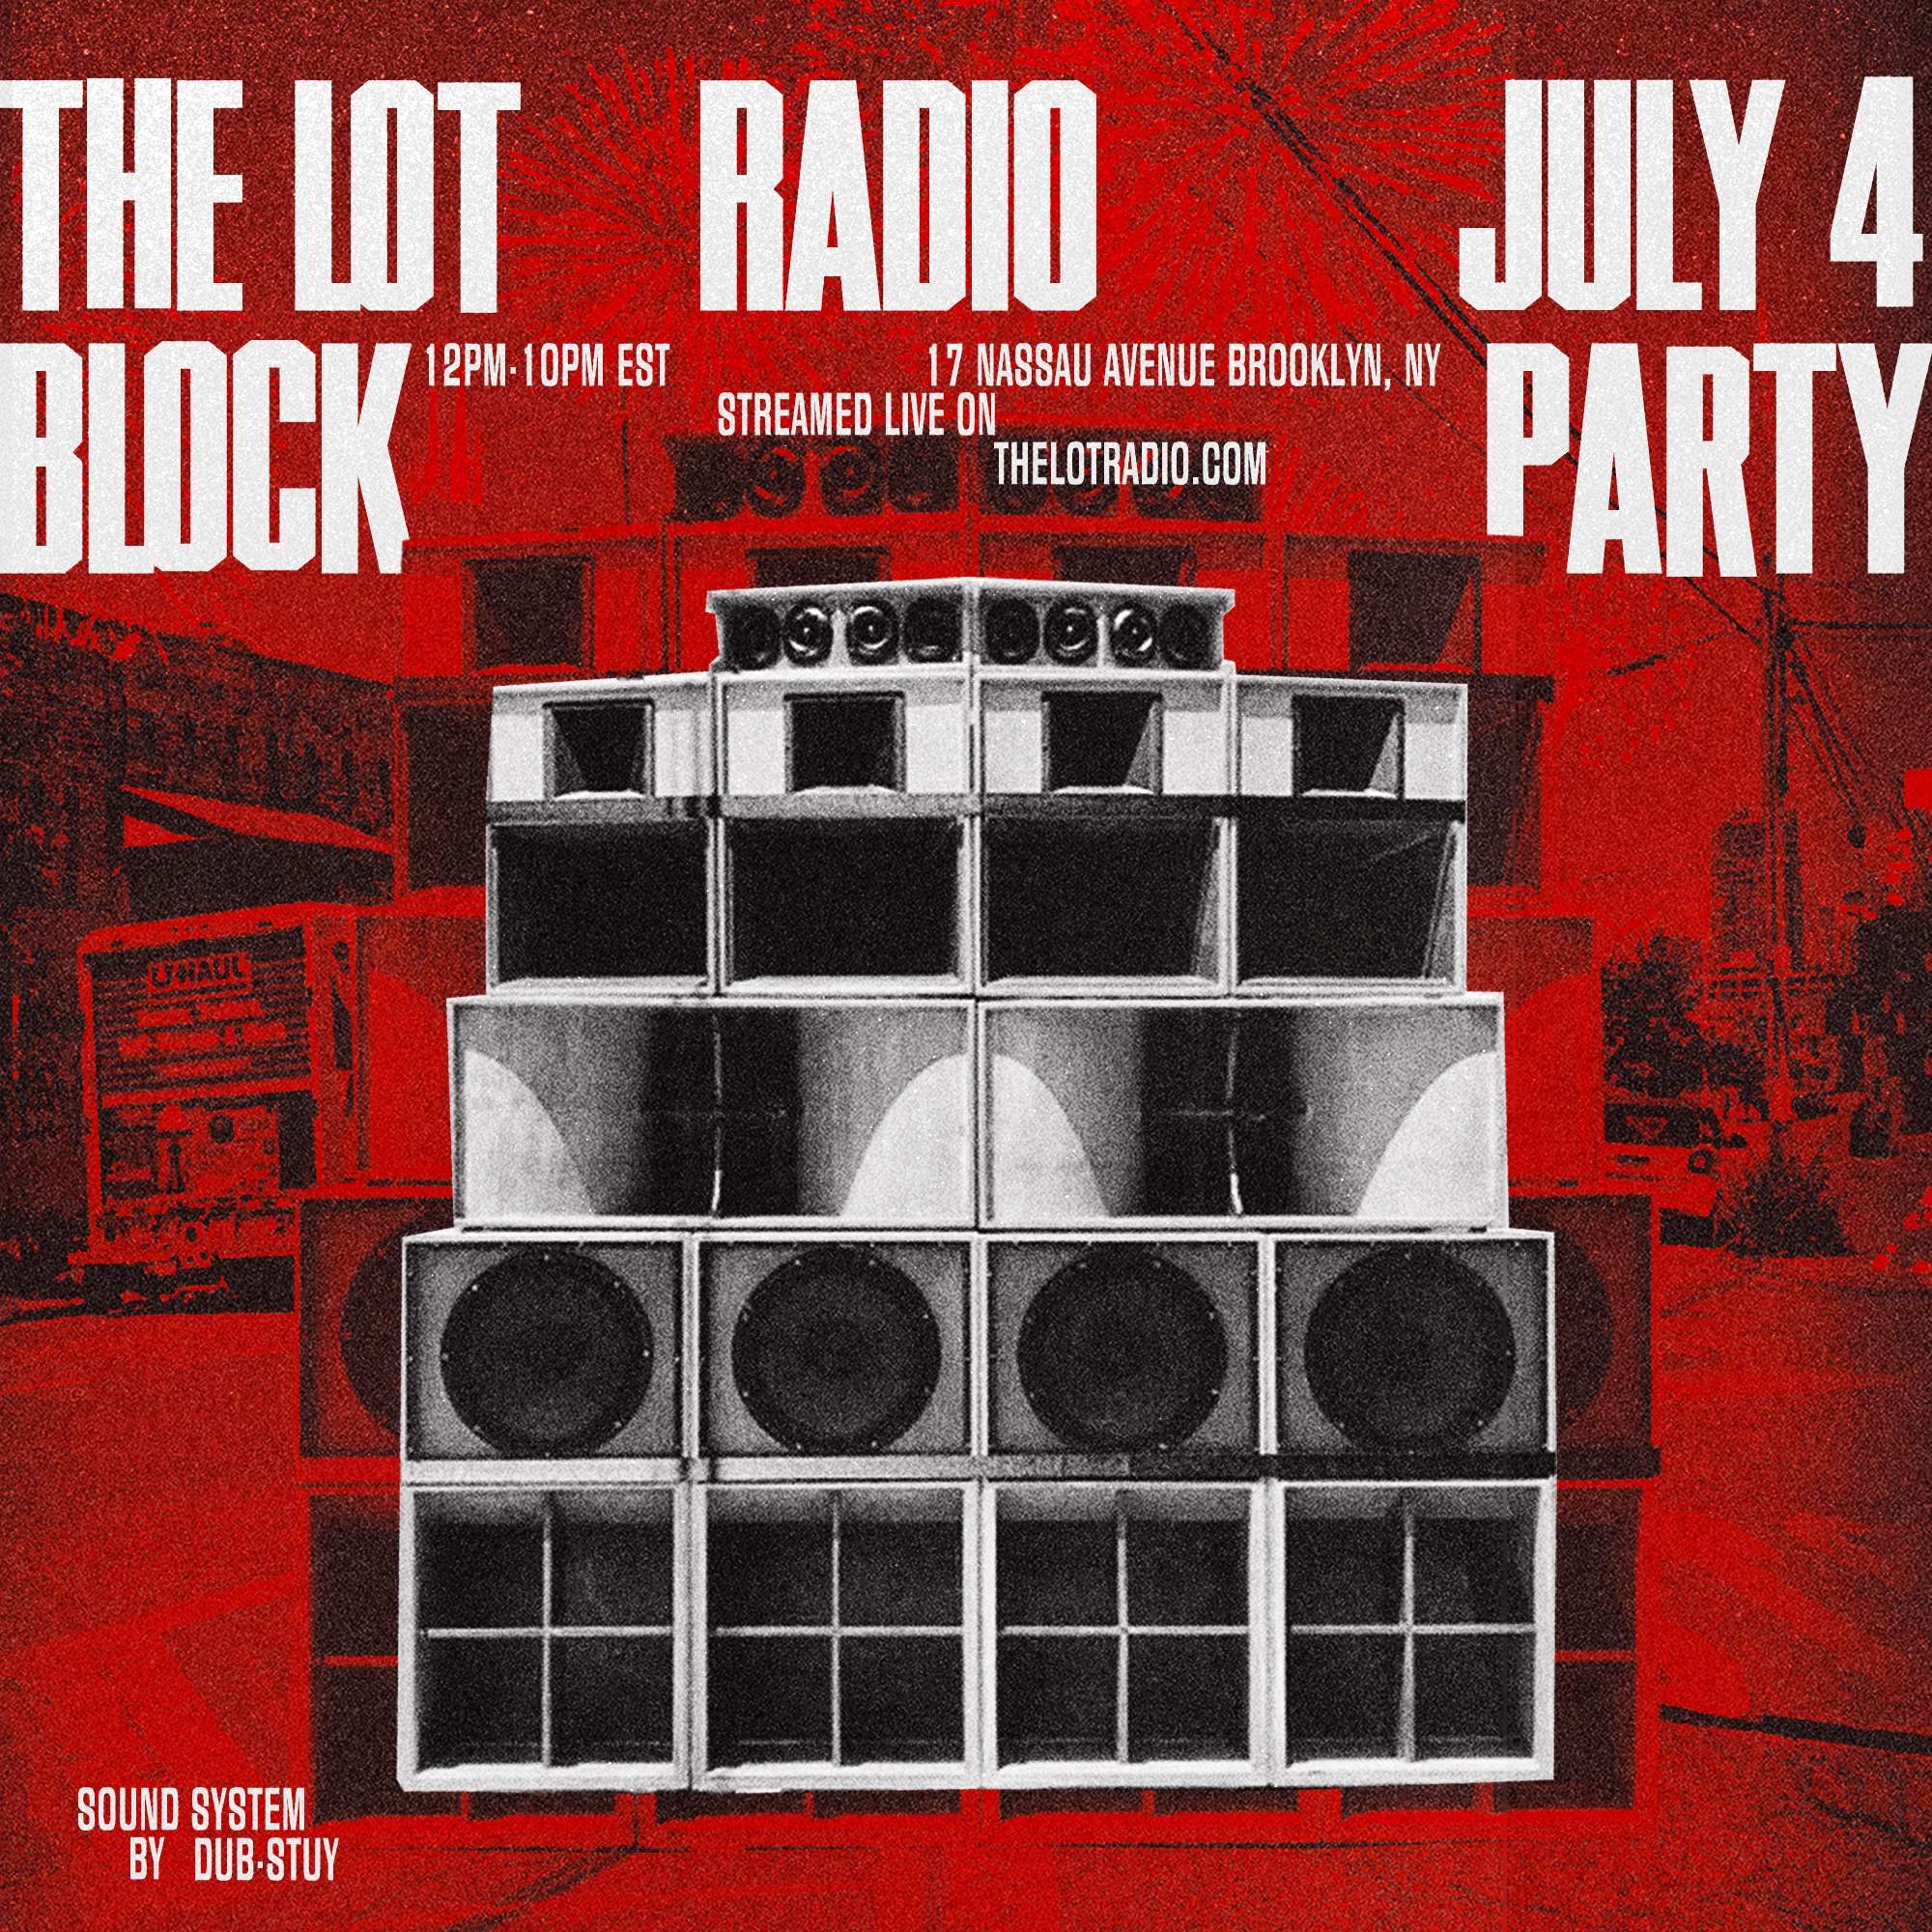 The Lot Radio Block Party - フライヤー表